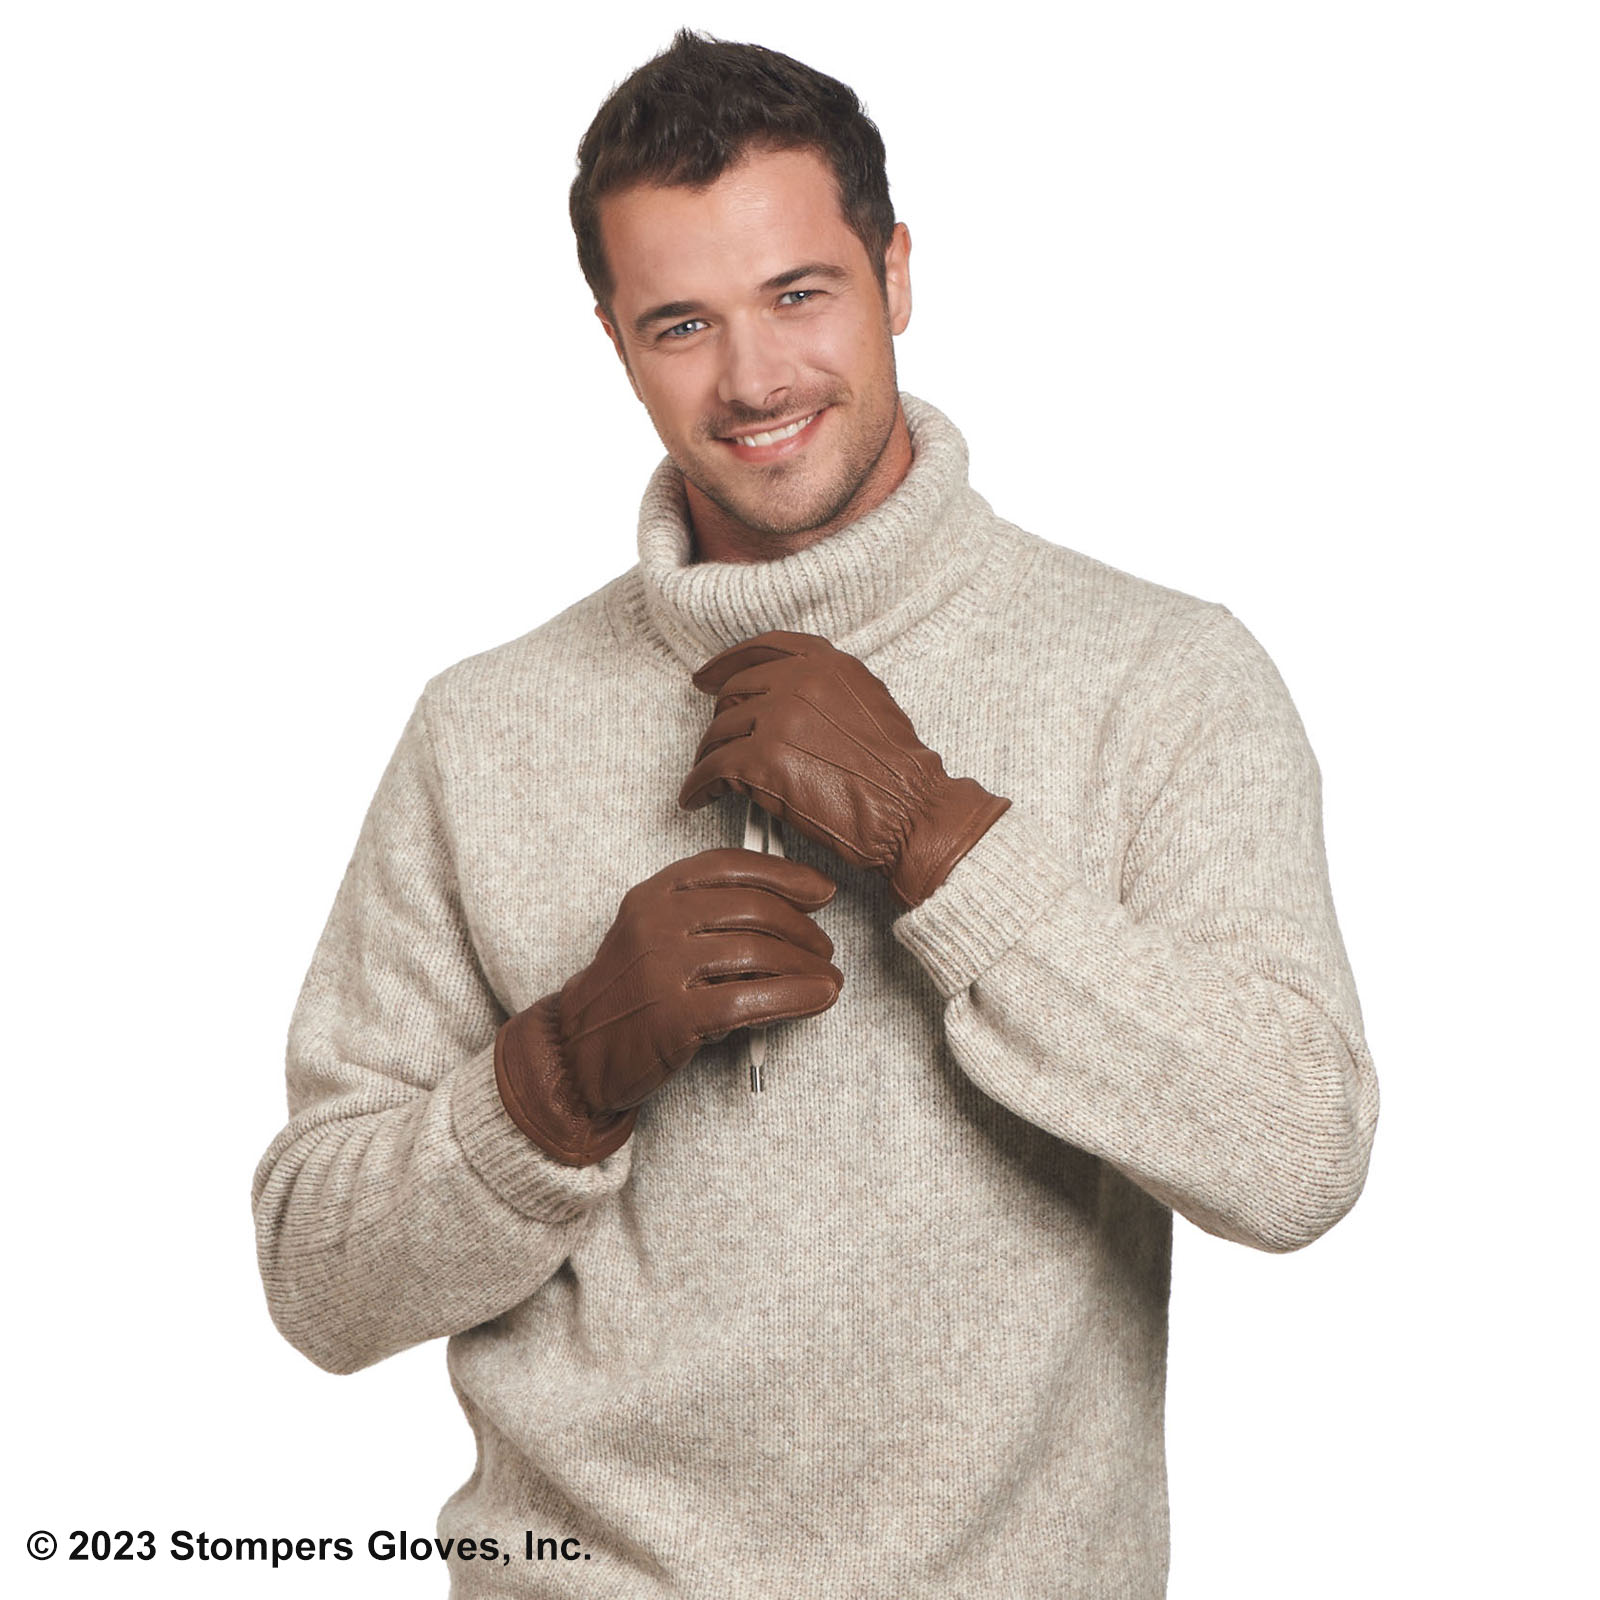 https://stompersgloves.com/wp-content/uploads/Products/8103XXXX-RS0366-Sleigh-Winter-Glove/8103XXXX-RS0366-Sleigh-Winter-Glove-Male-Model-Wearing-Brown-Glove.jpg